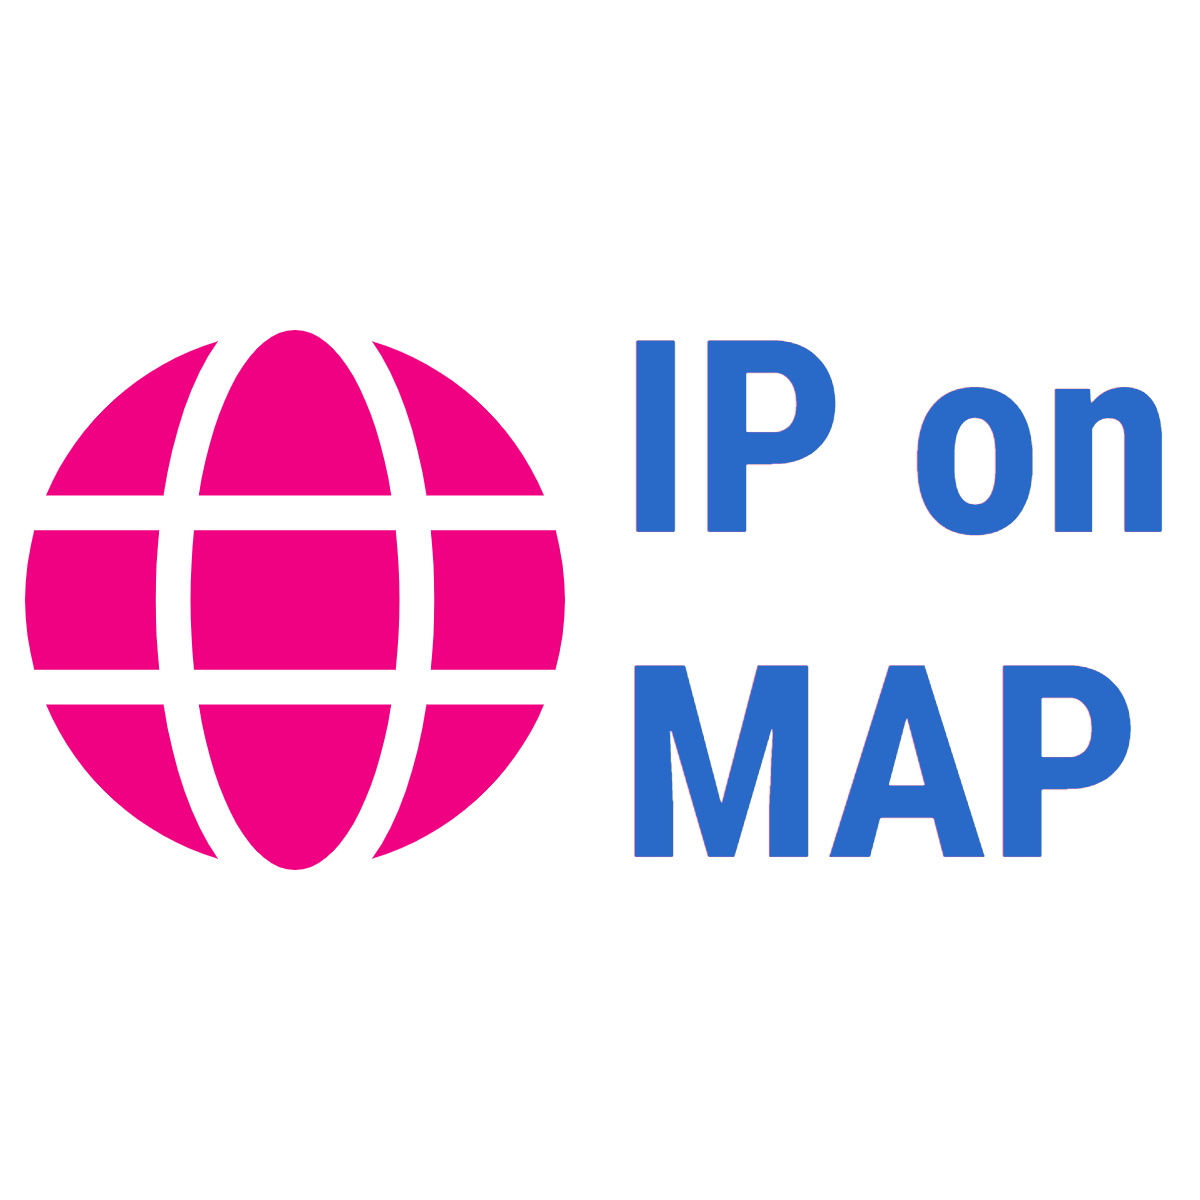 (c) Iponmap.com